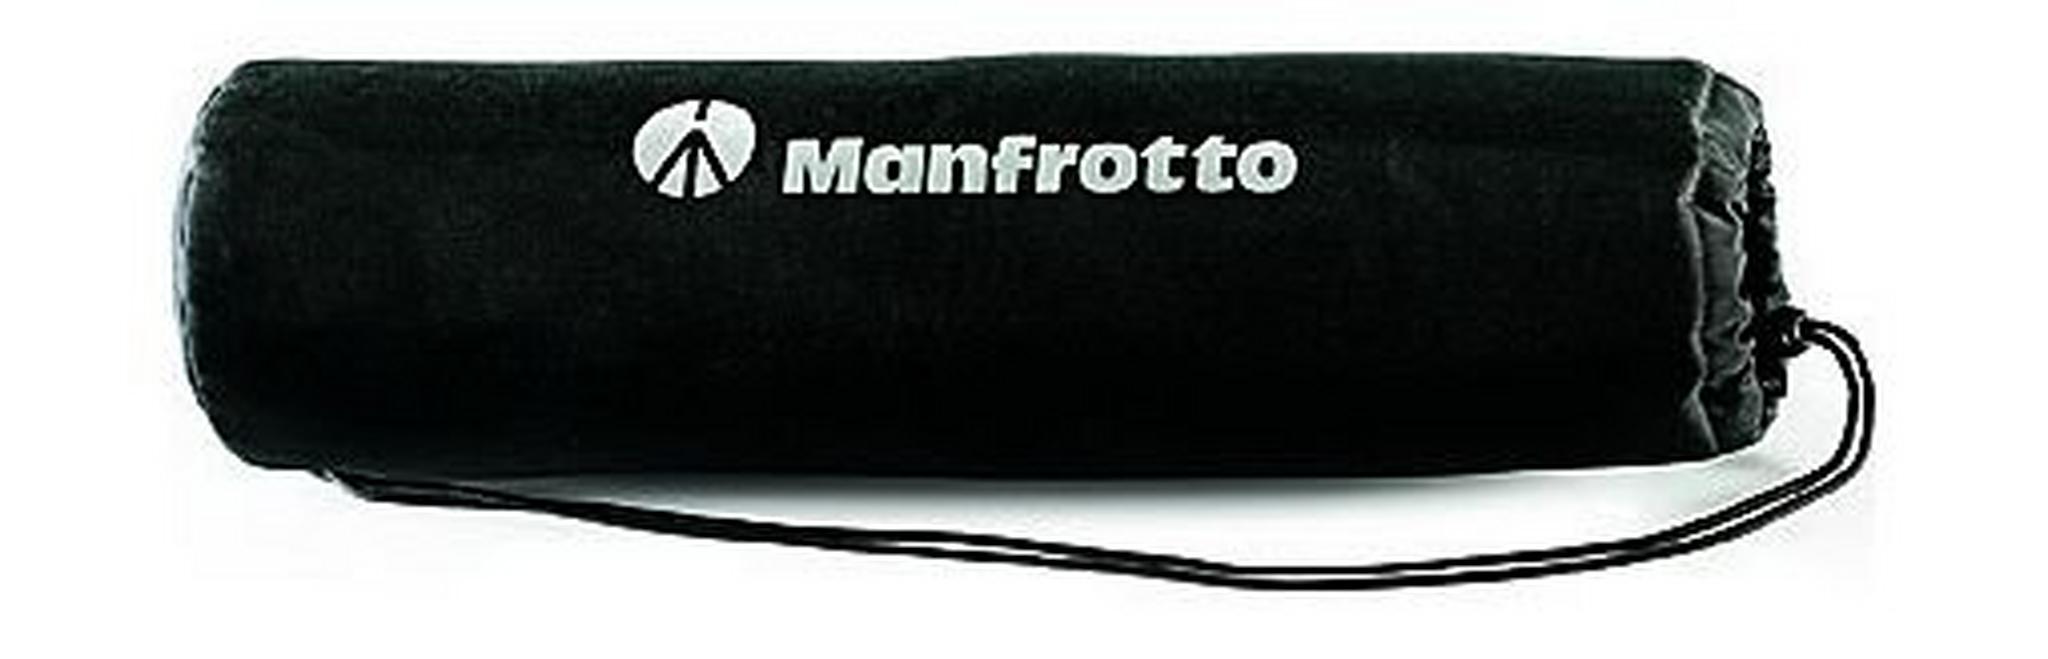 Manfrotto Compact Action 155cm Joystick Head Tripod (MKCOMPACTACN-BK) - Black